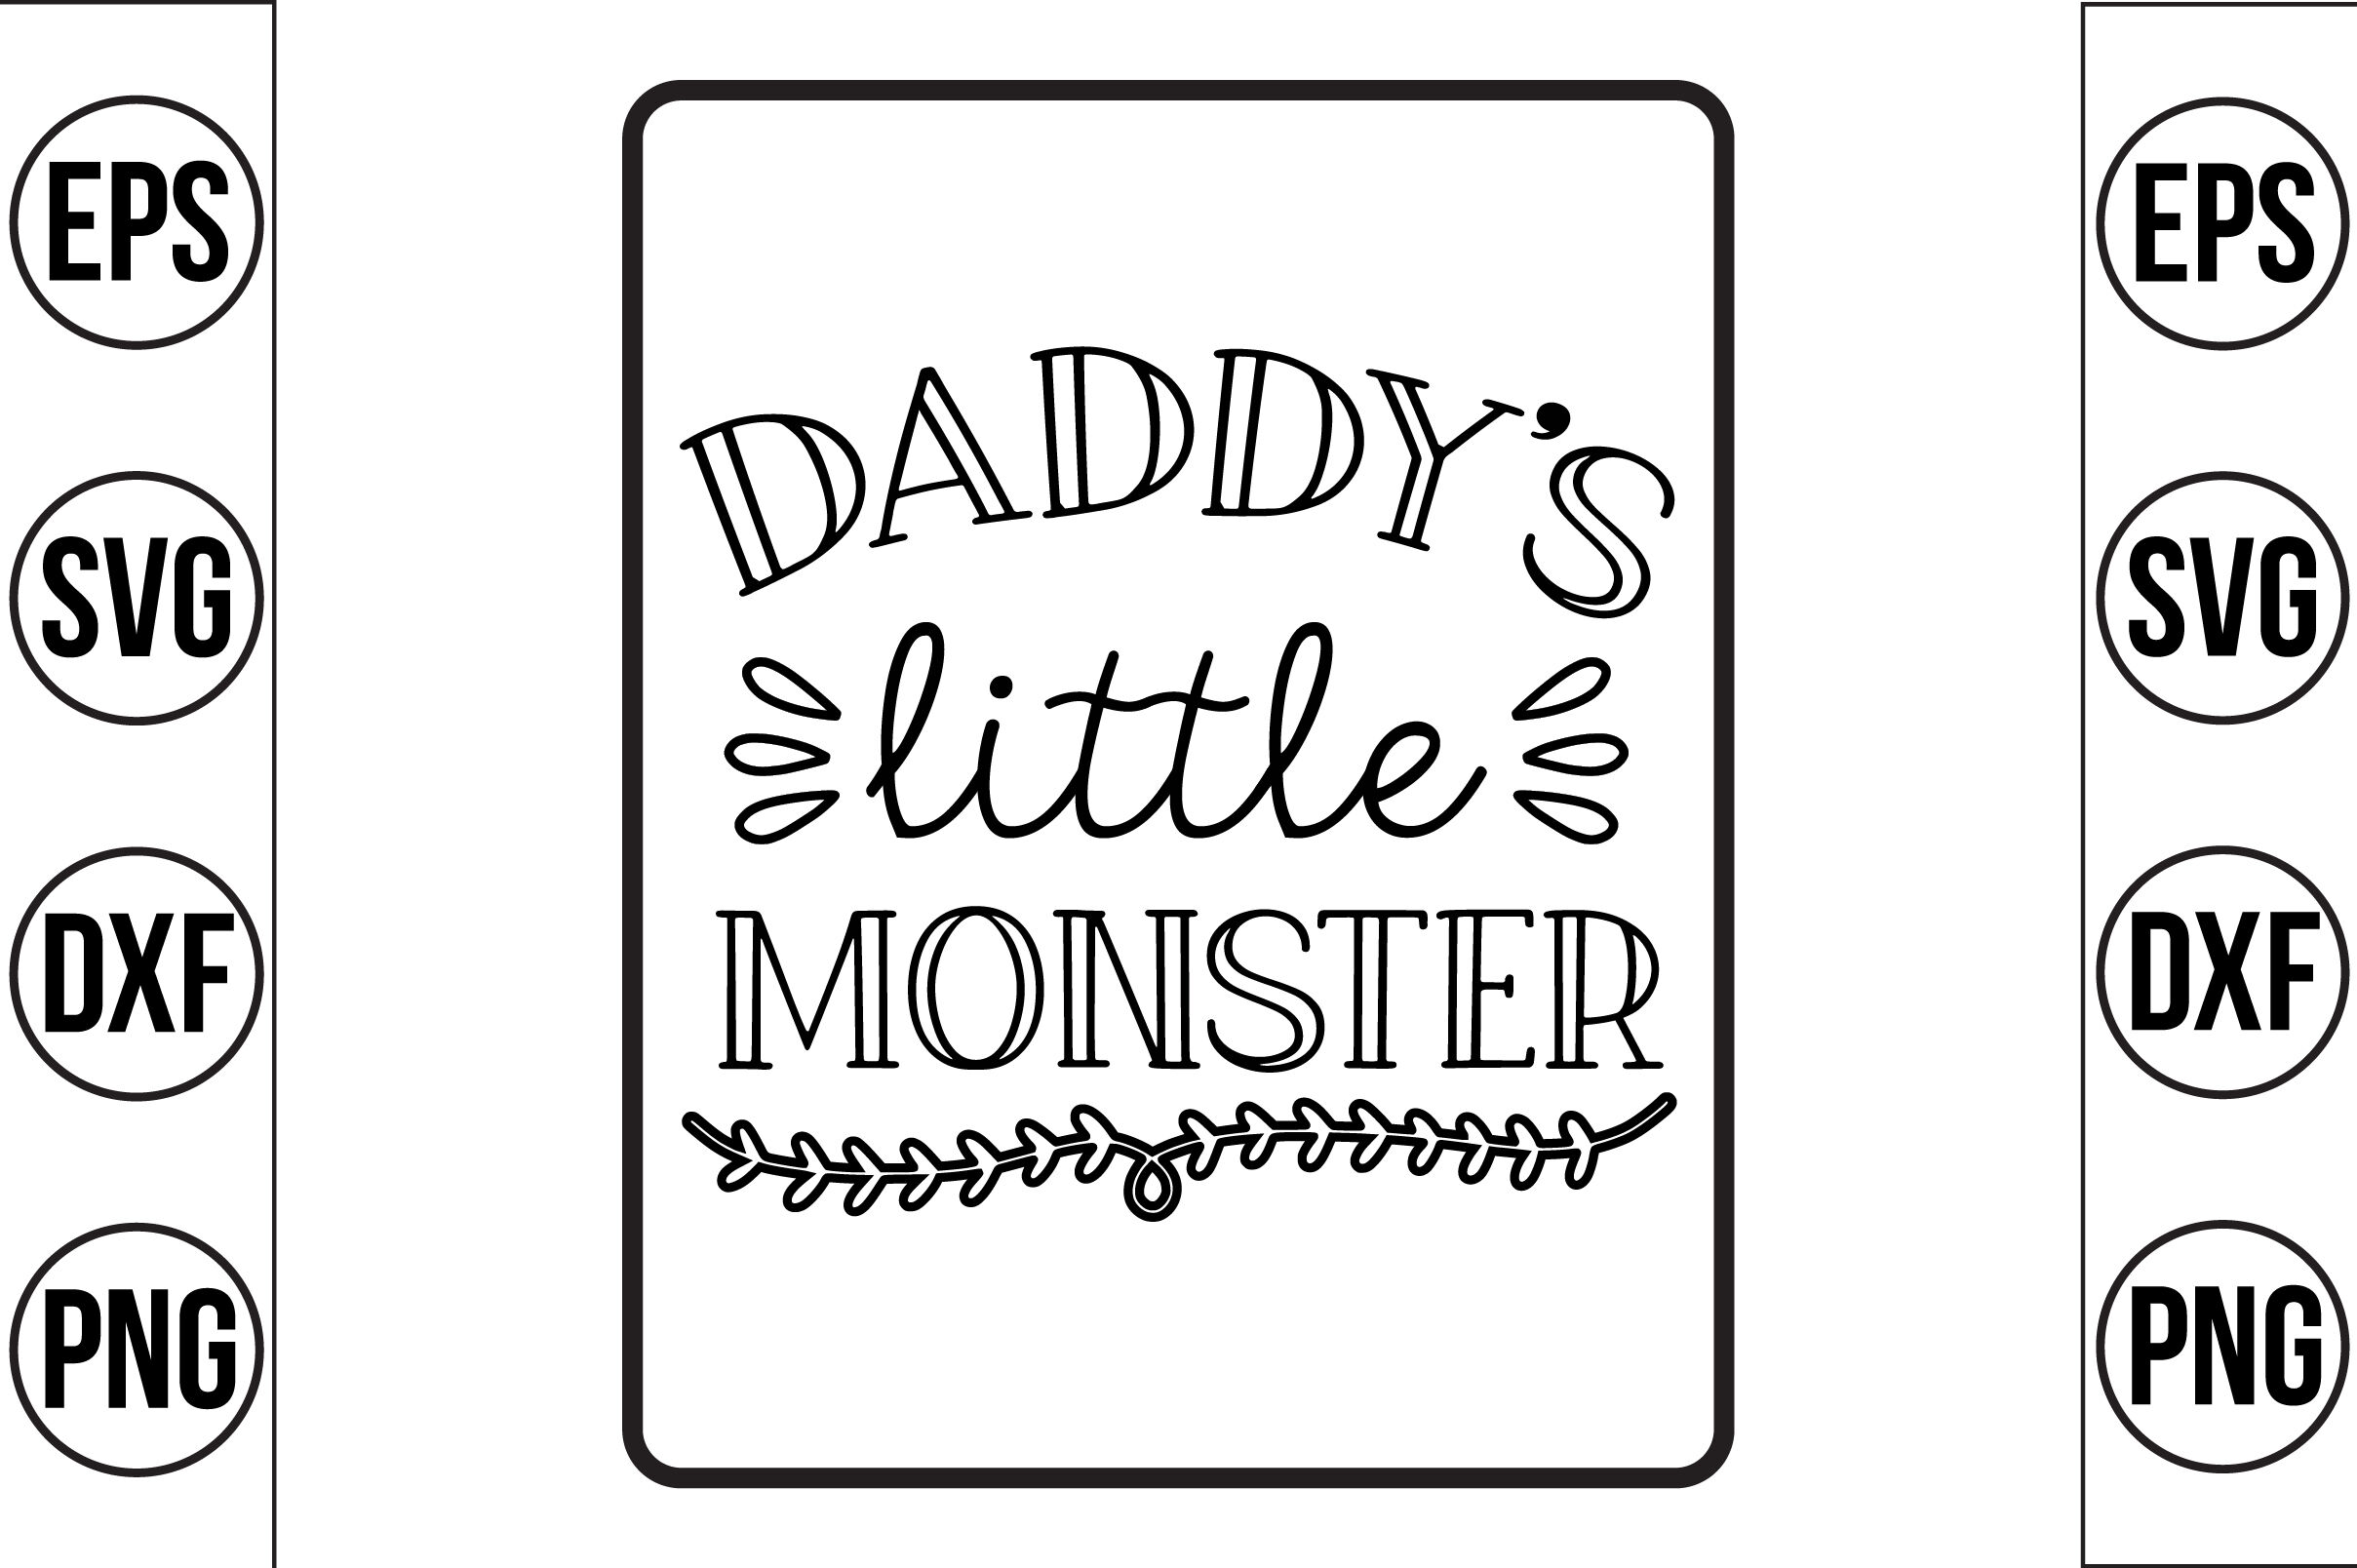 Daddys little monster